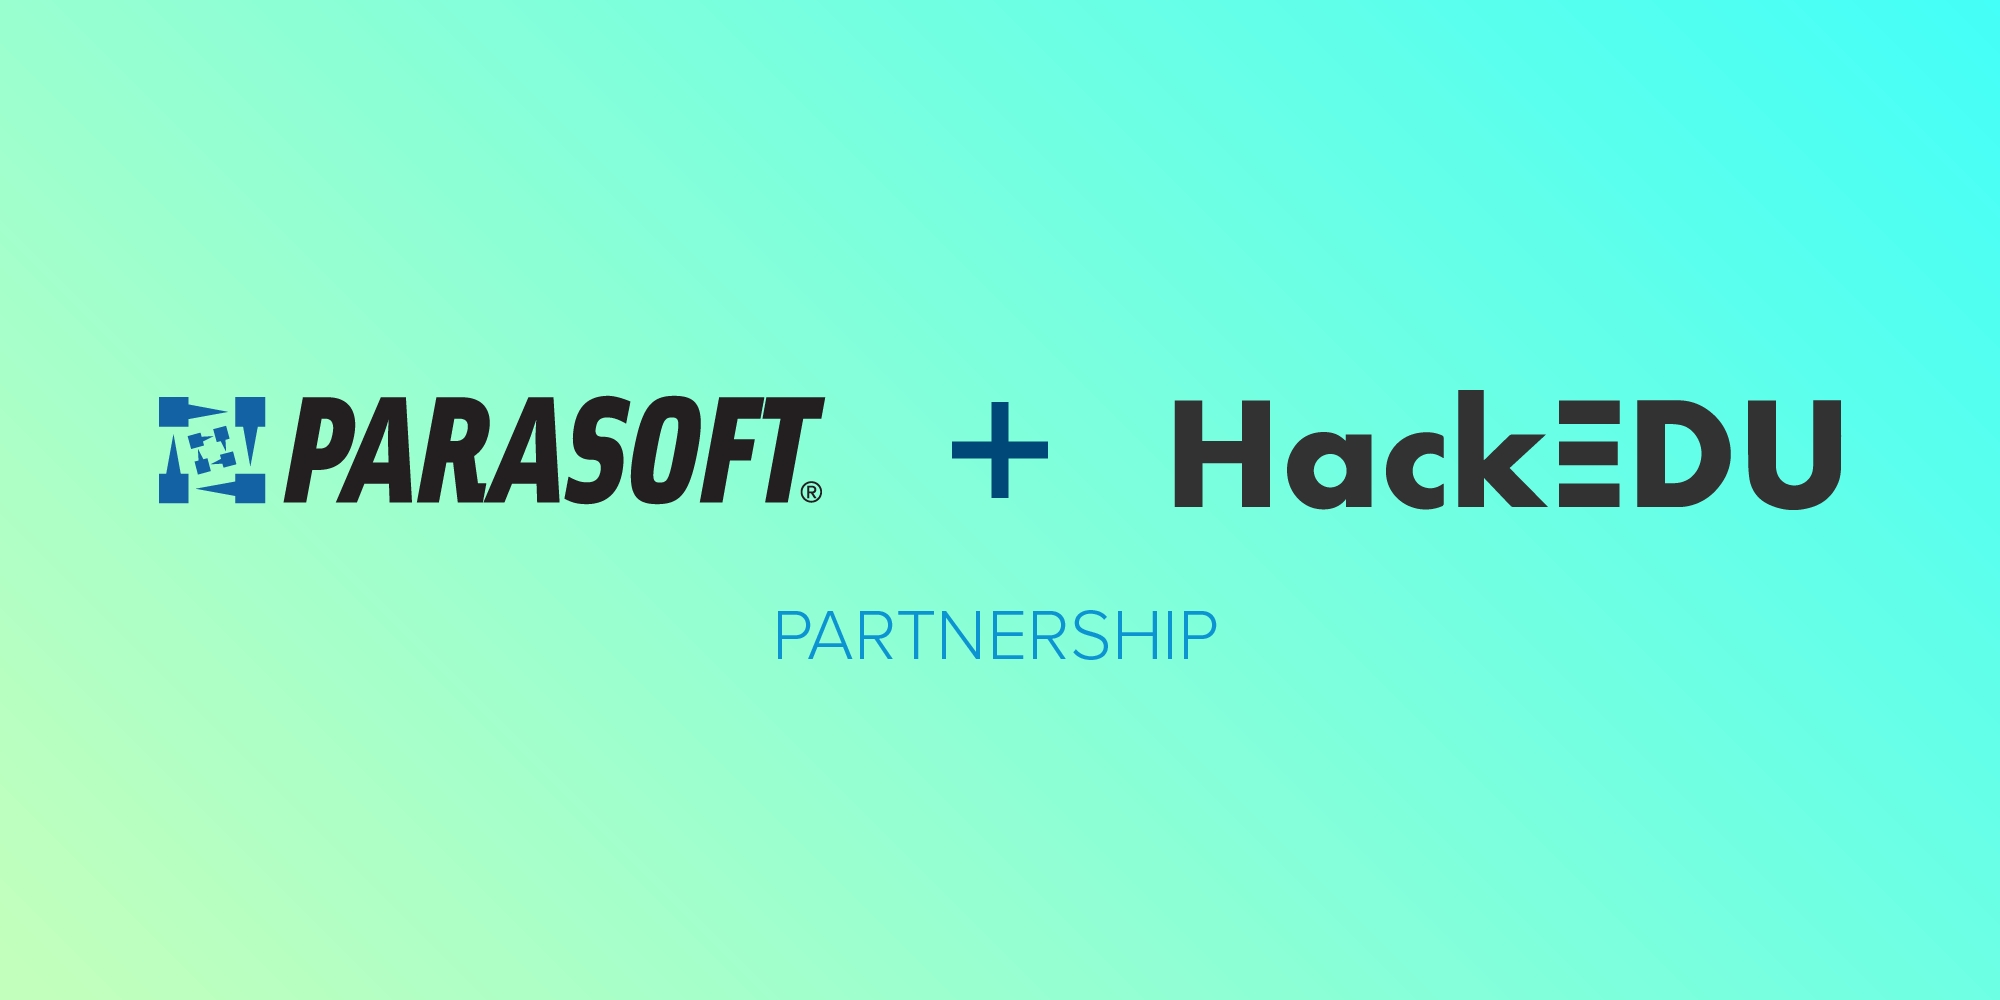 Parasoft kooperiert mit HackEDU: Cybersecurity im Fokus